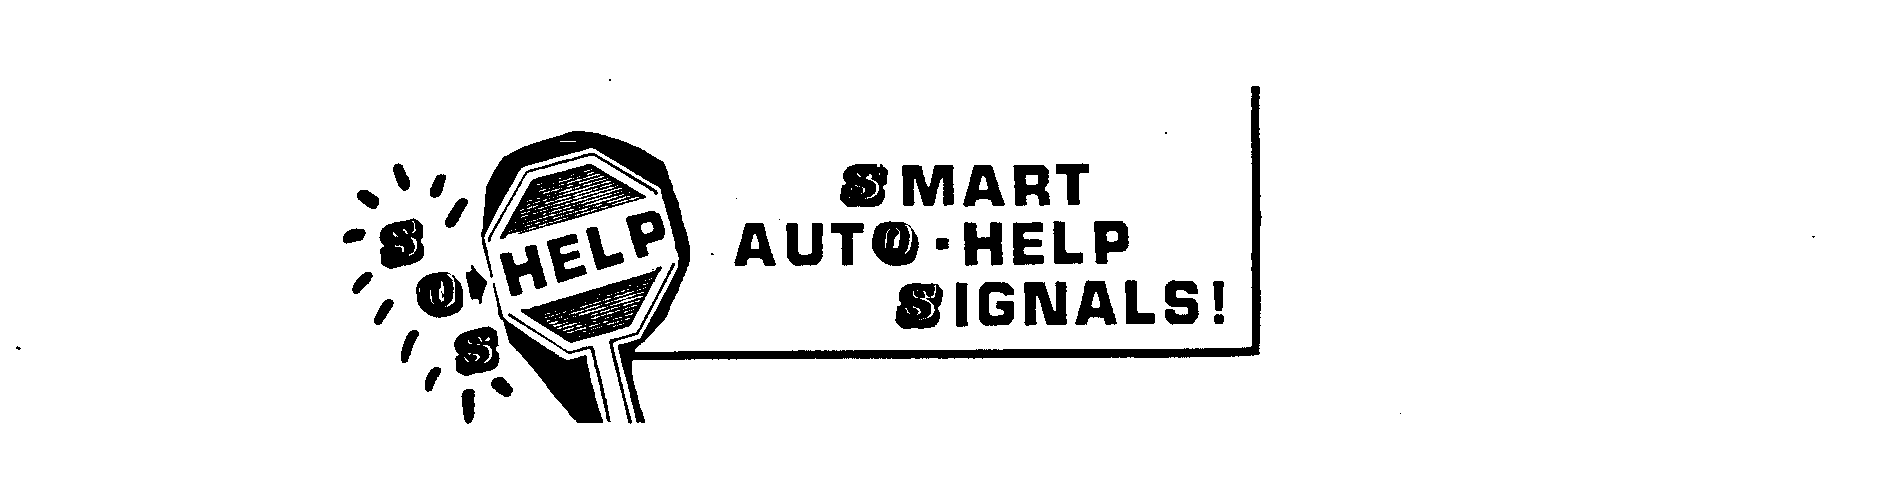  SMART AUTO-HELP SIGNALS! SOS HELP